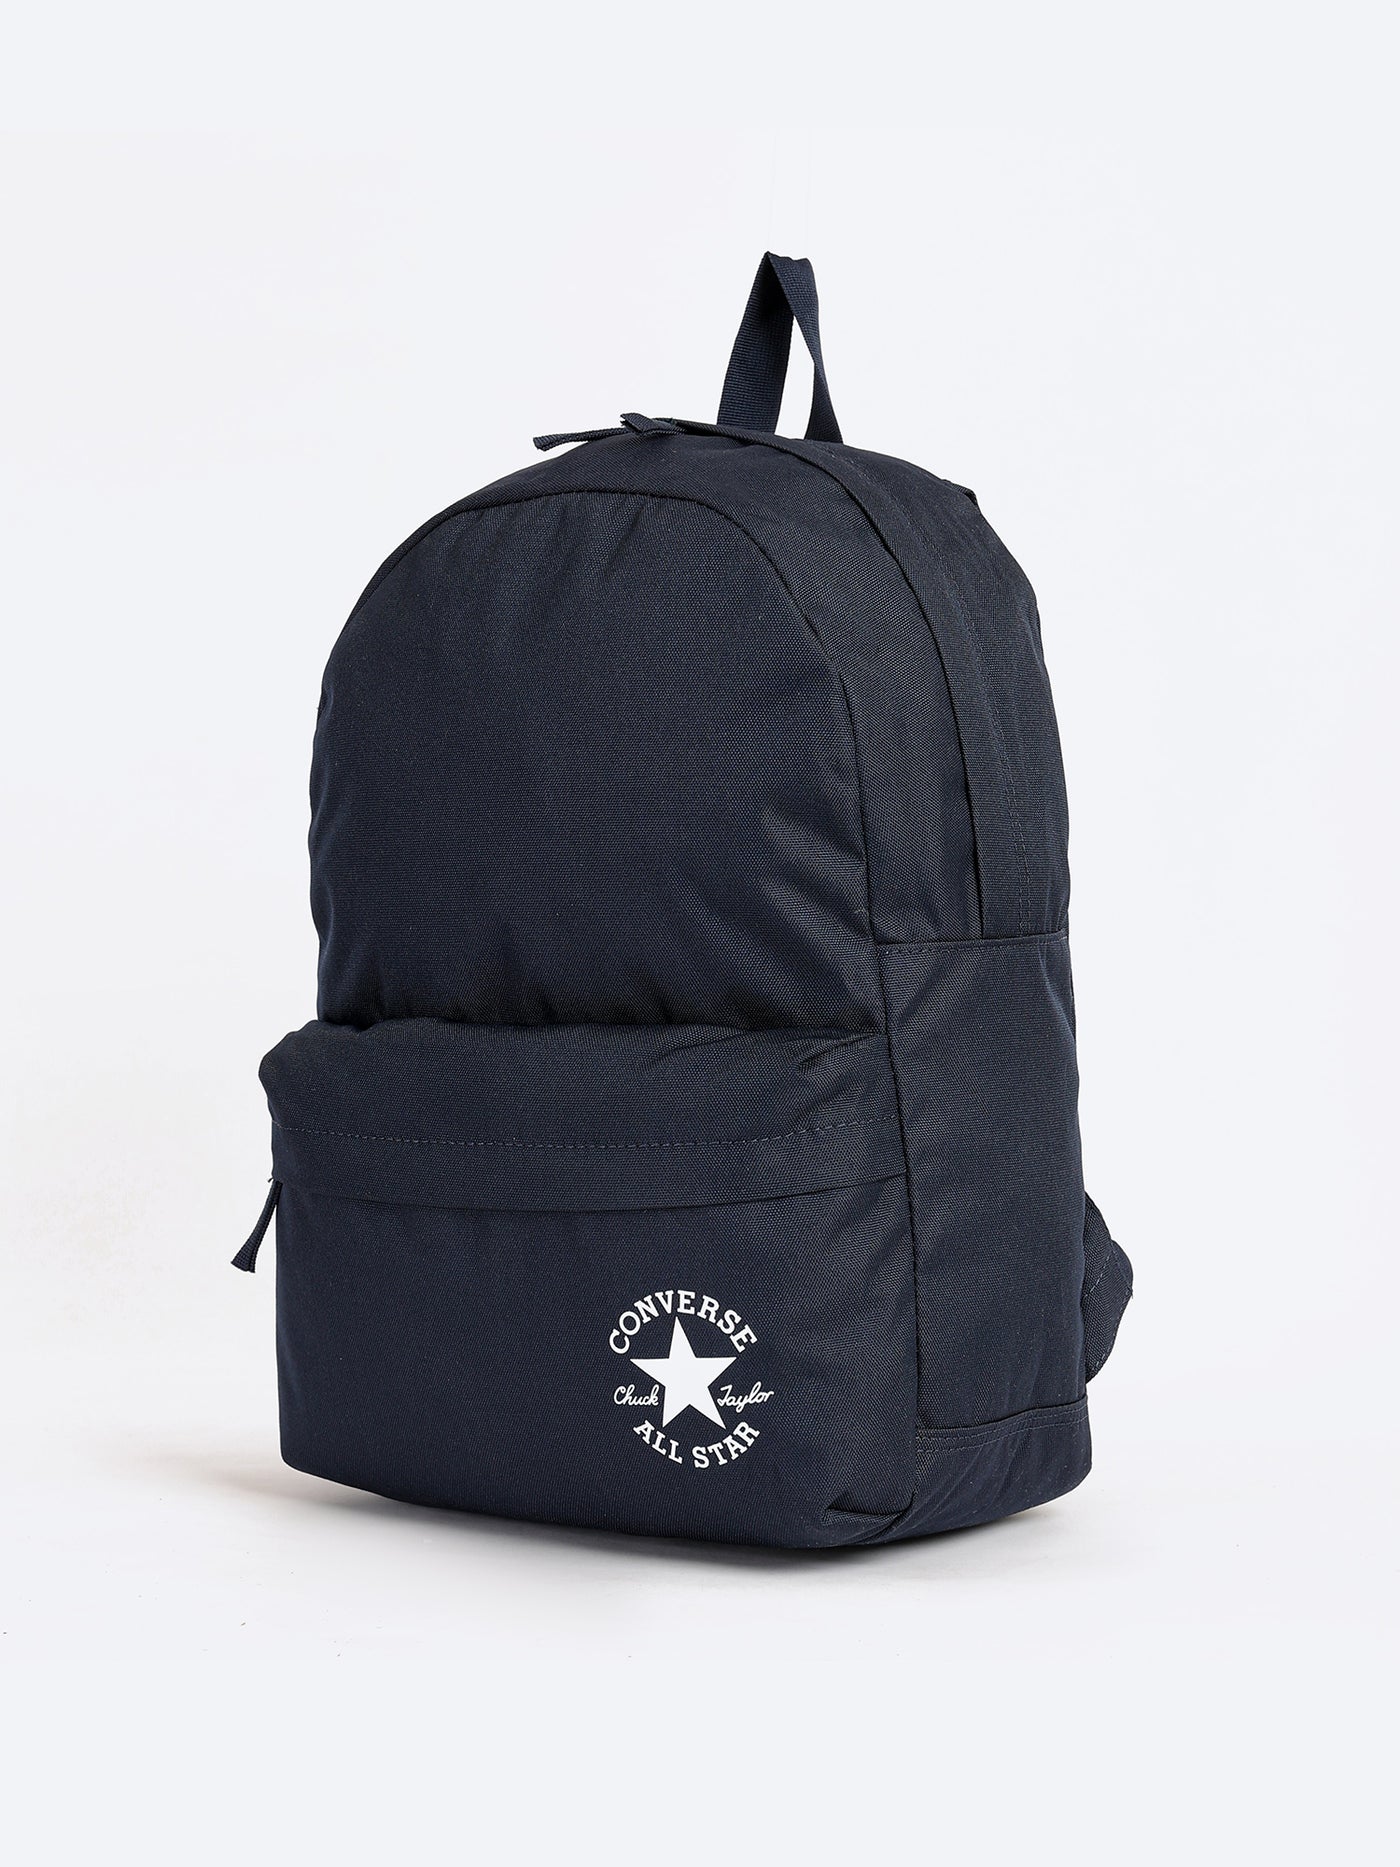 Unisex Backpack - Speed 3 - All Stars